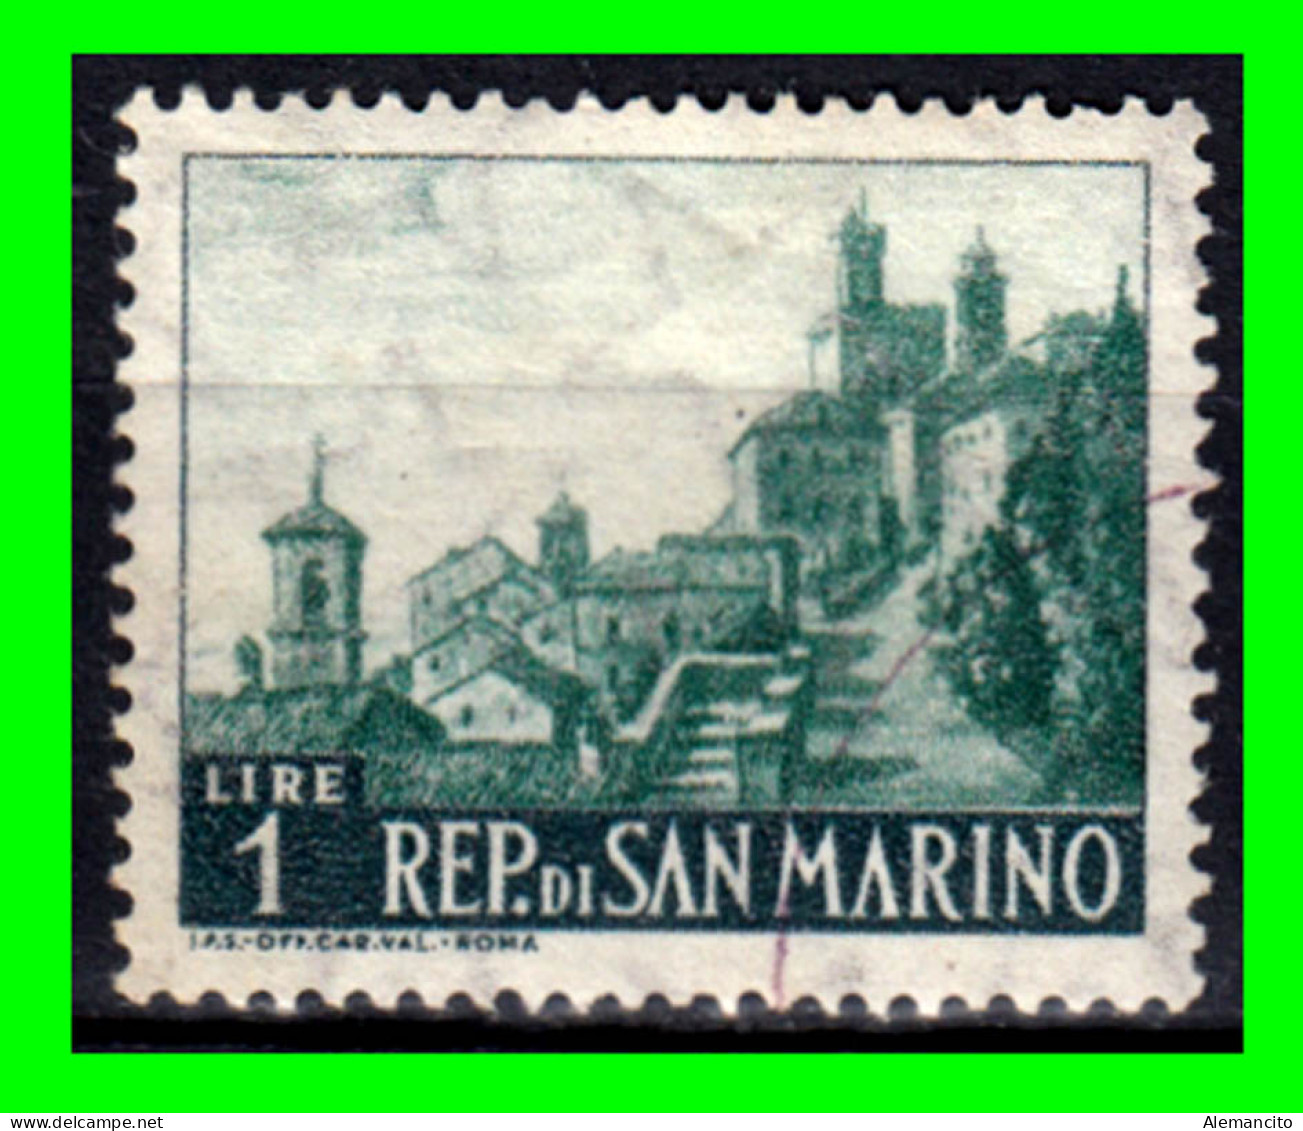 SAN MARINO ( EUROPA ) SELLO AÑO 1961 TURISMO - Used Stamps